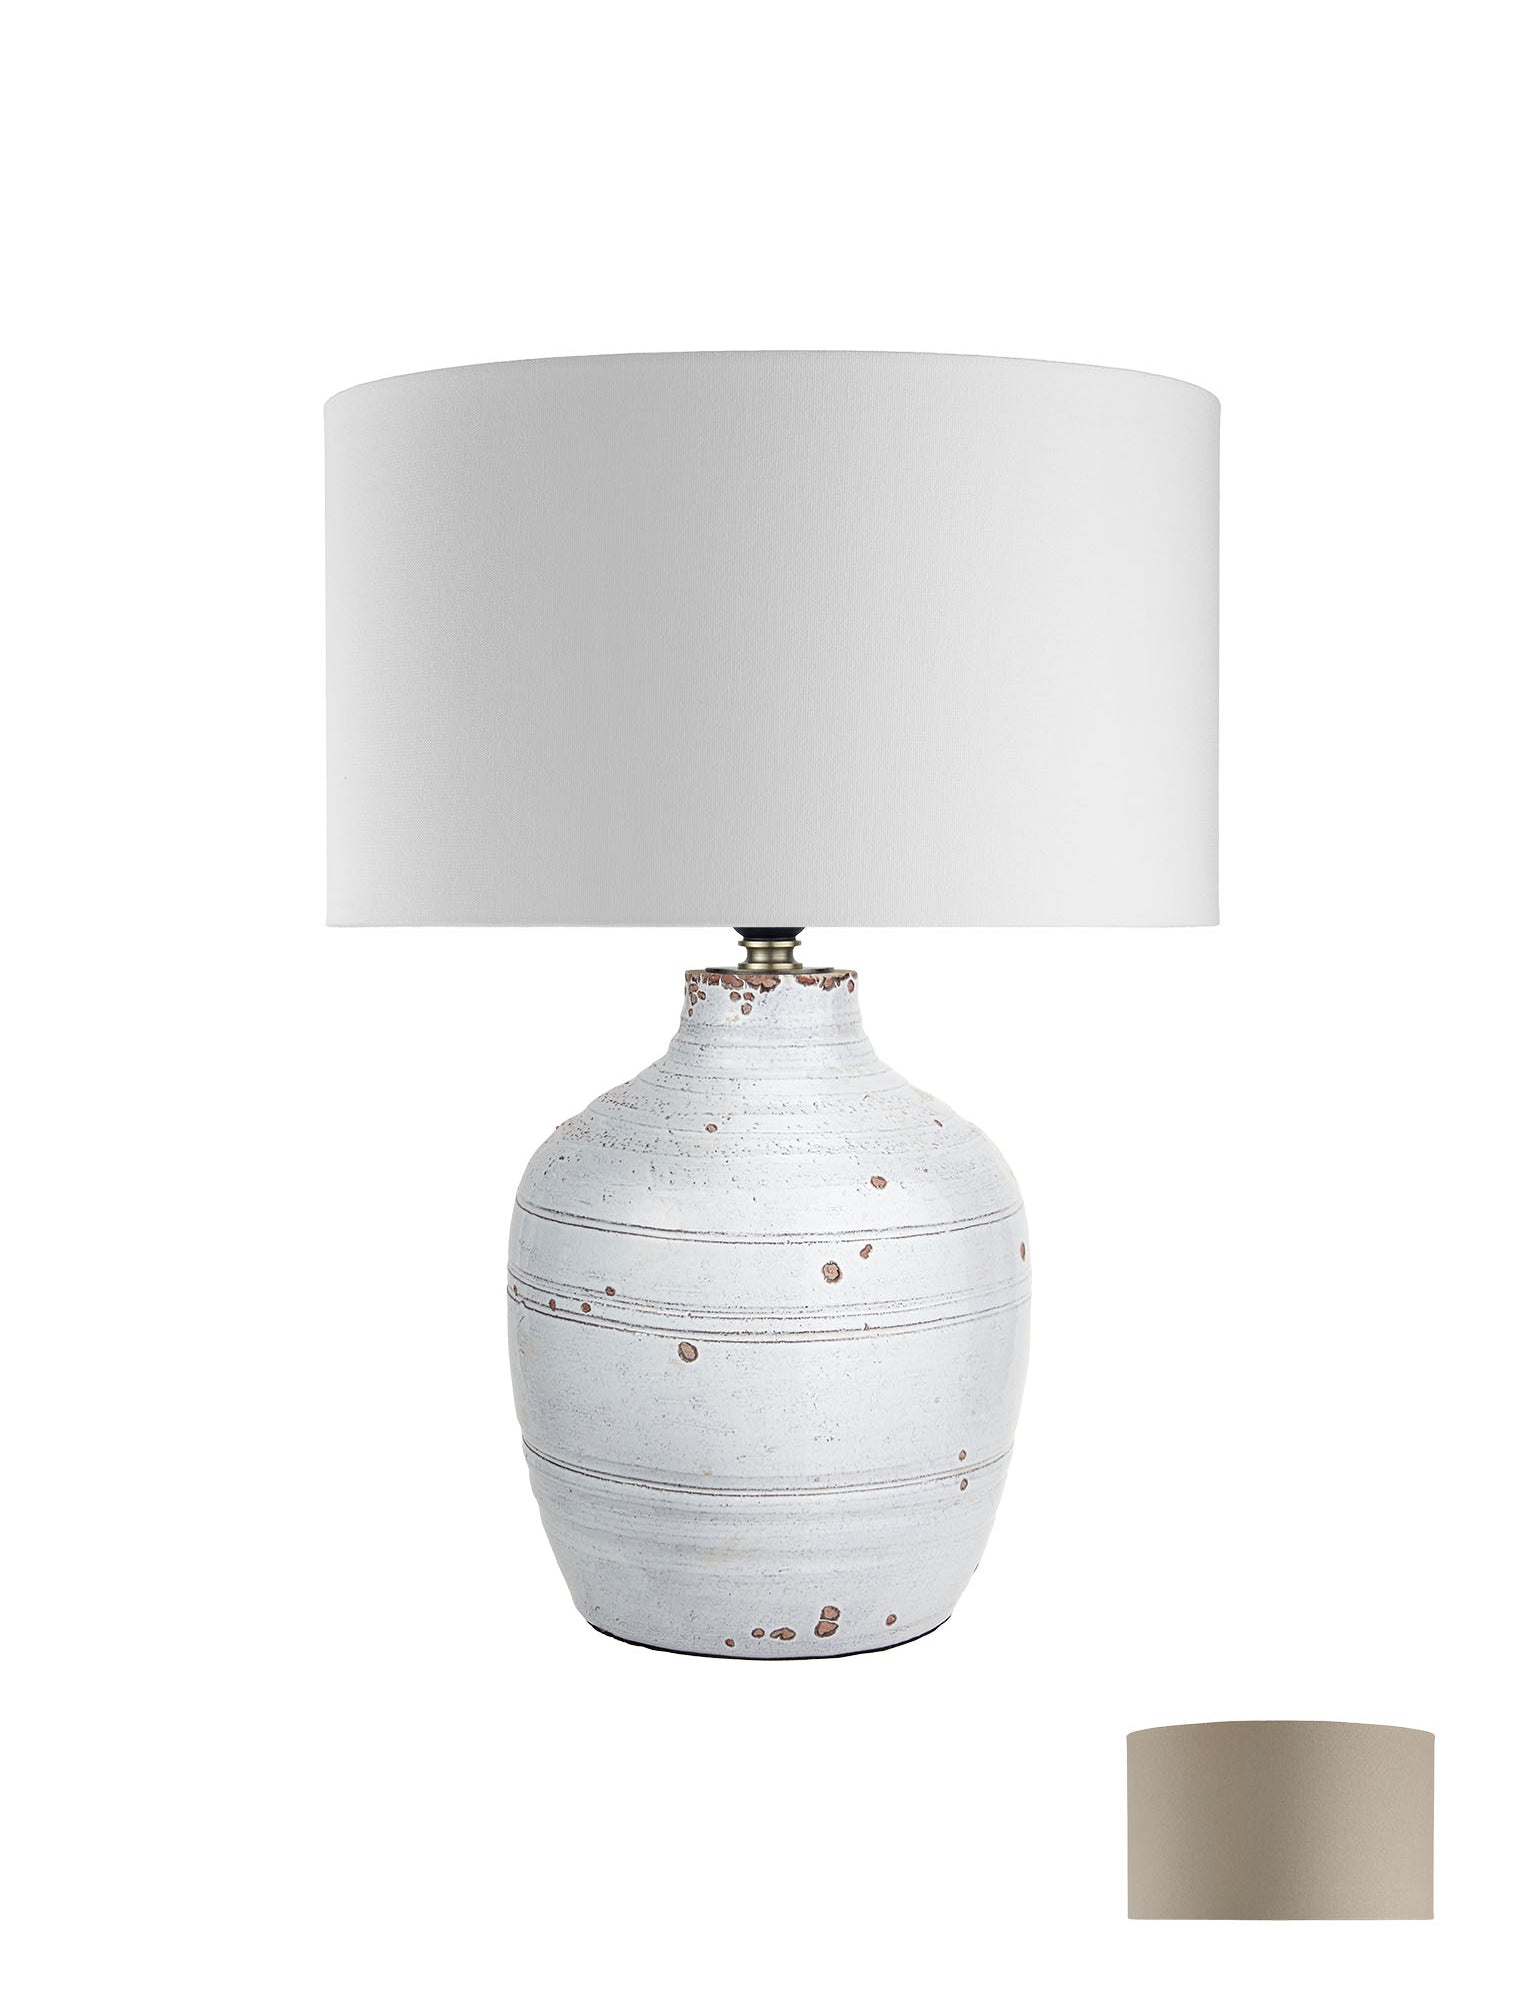 ceramic lamp base with white shades